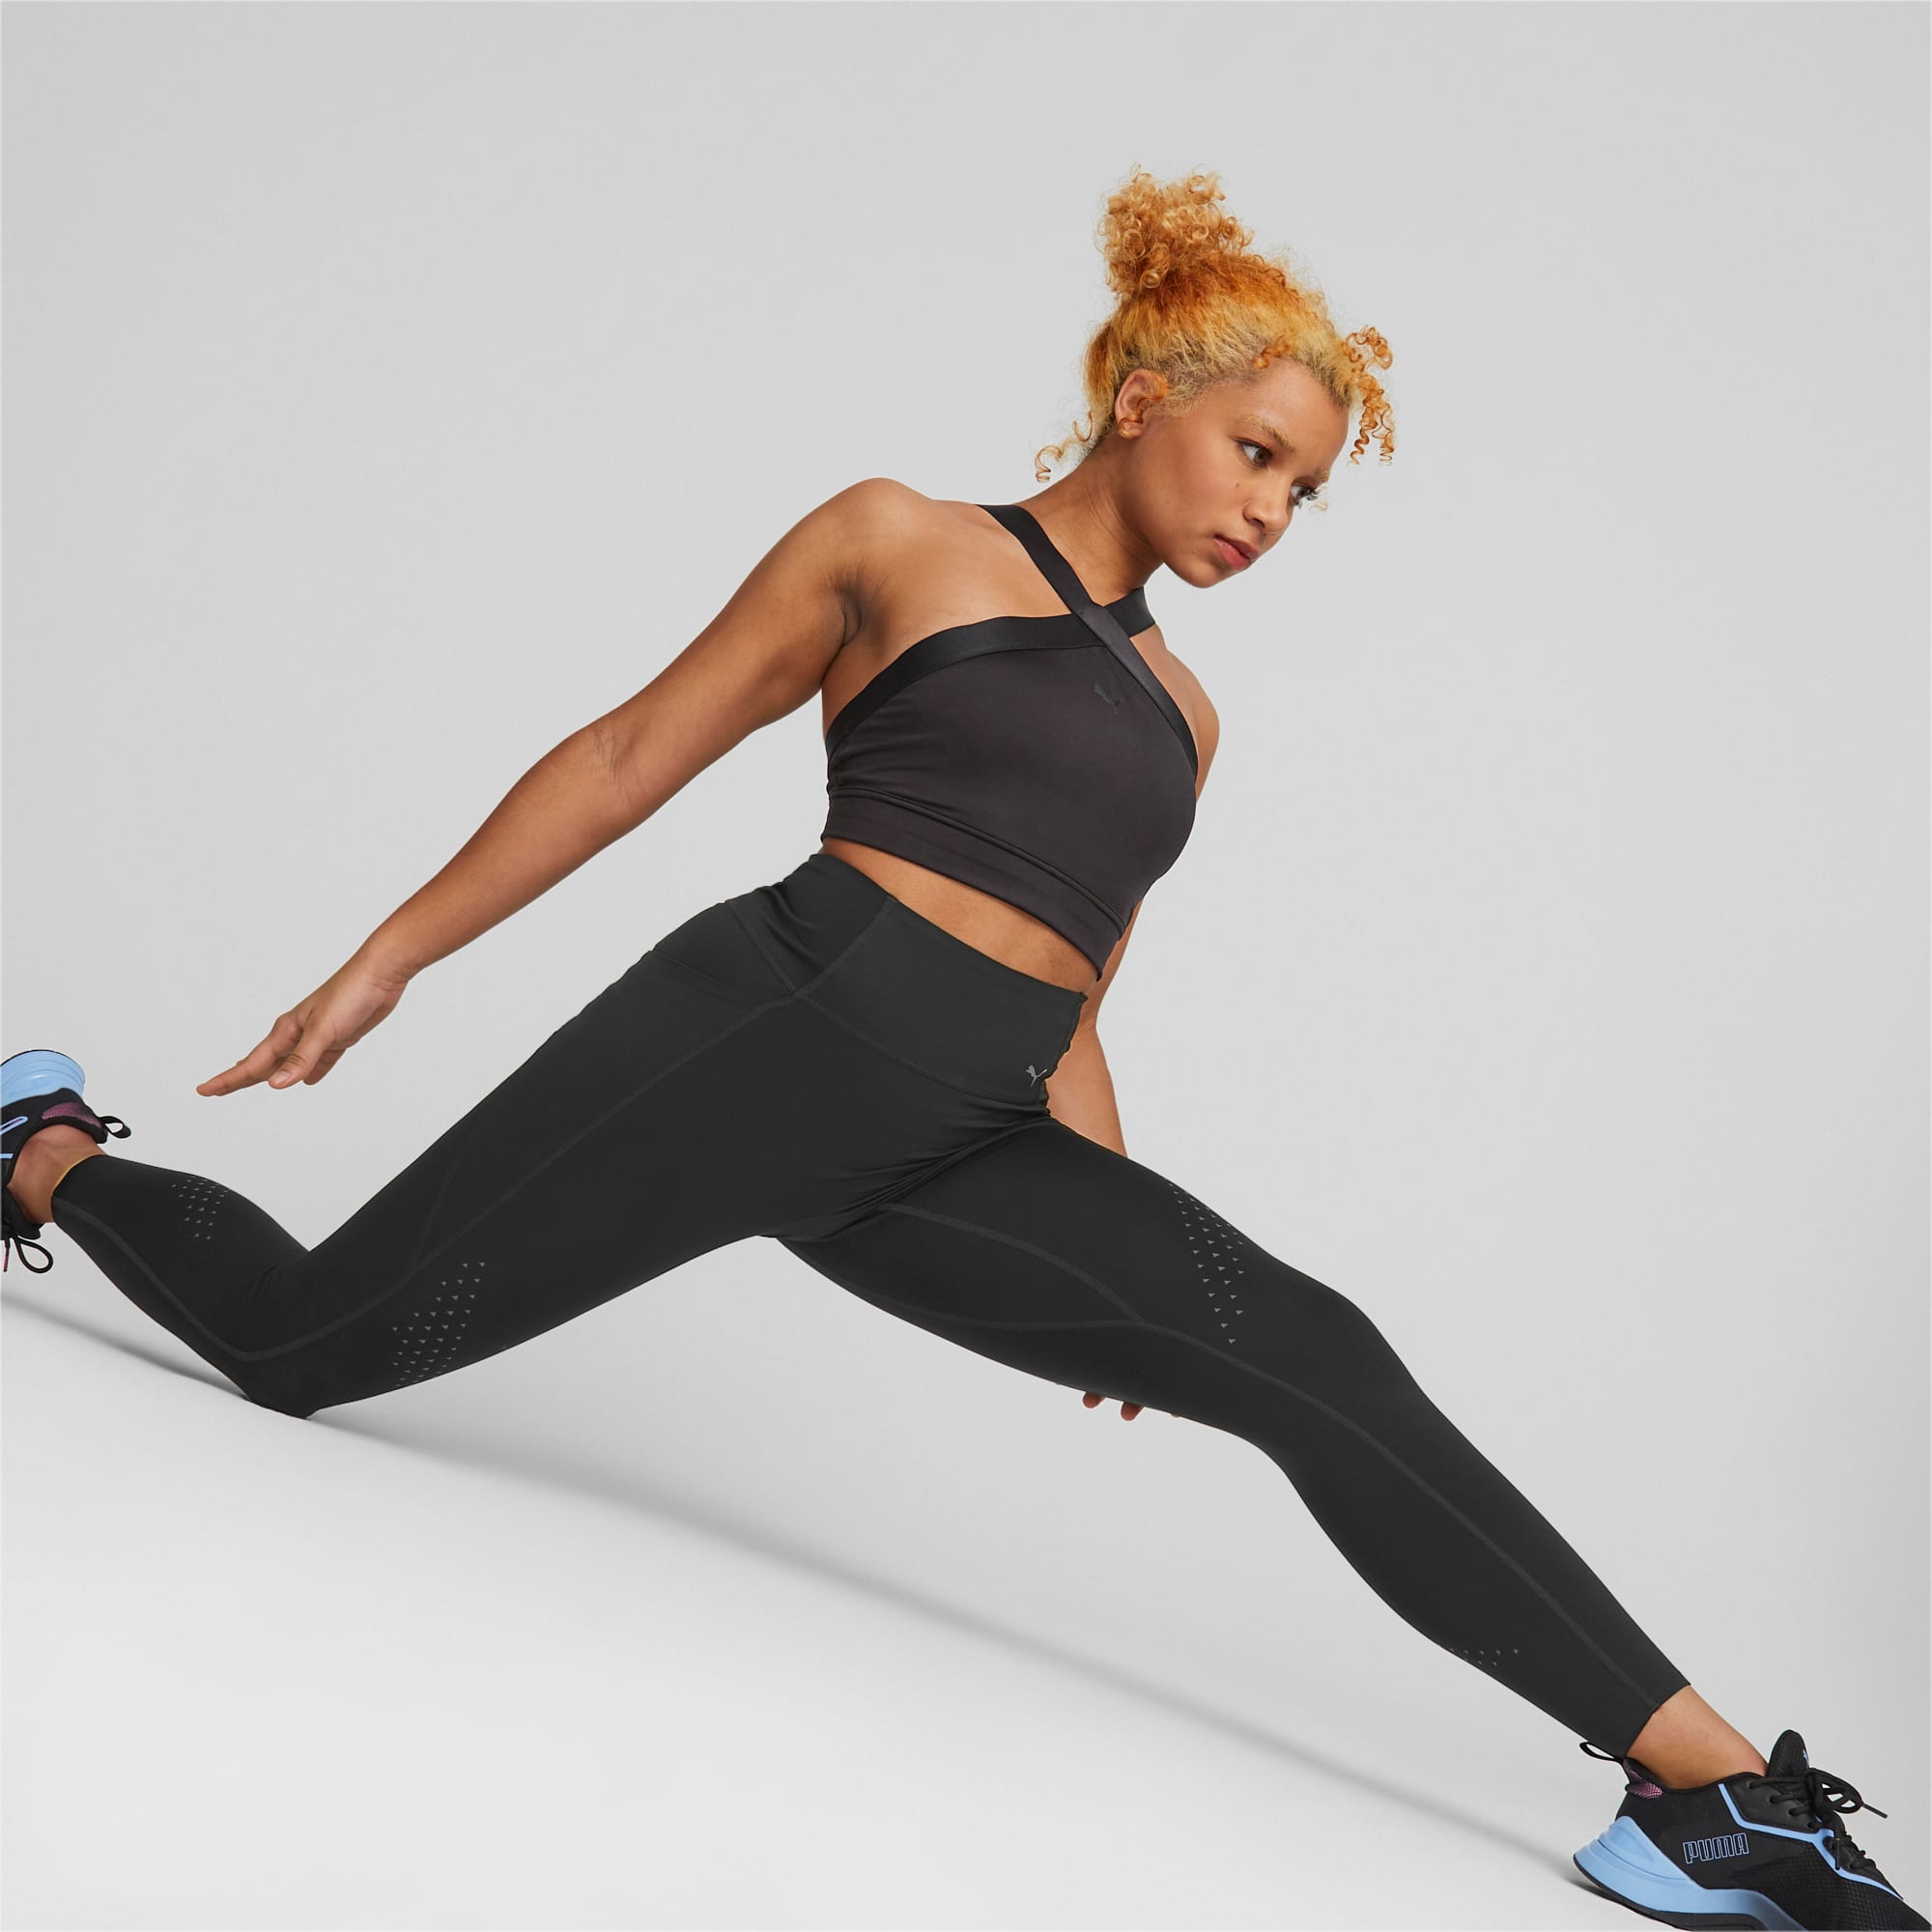 Allure Fitness Set Push-Up Effect Leggings with Sports Bra in Zebra Print  Black